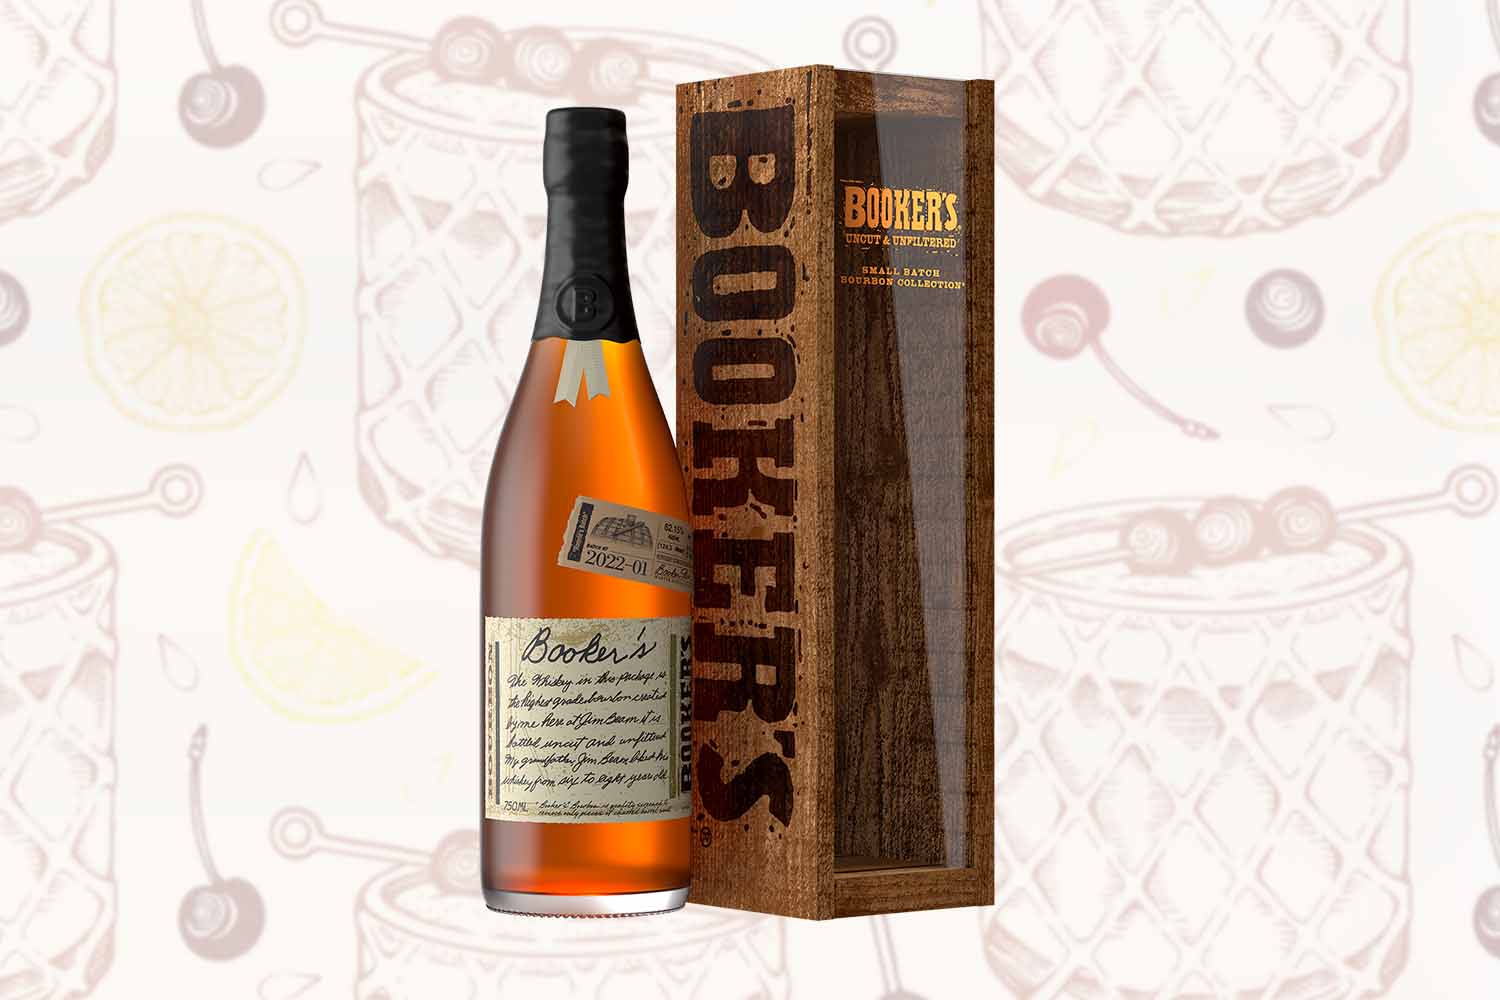 Booker’s Bourbon 2022-01 “Ronnie’s Batch”